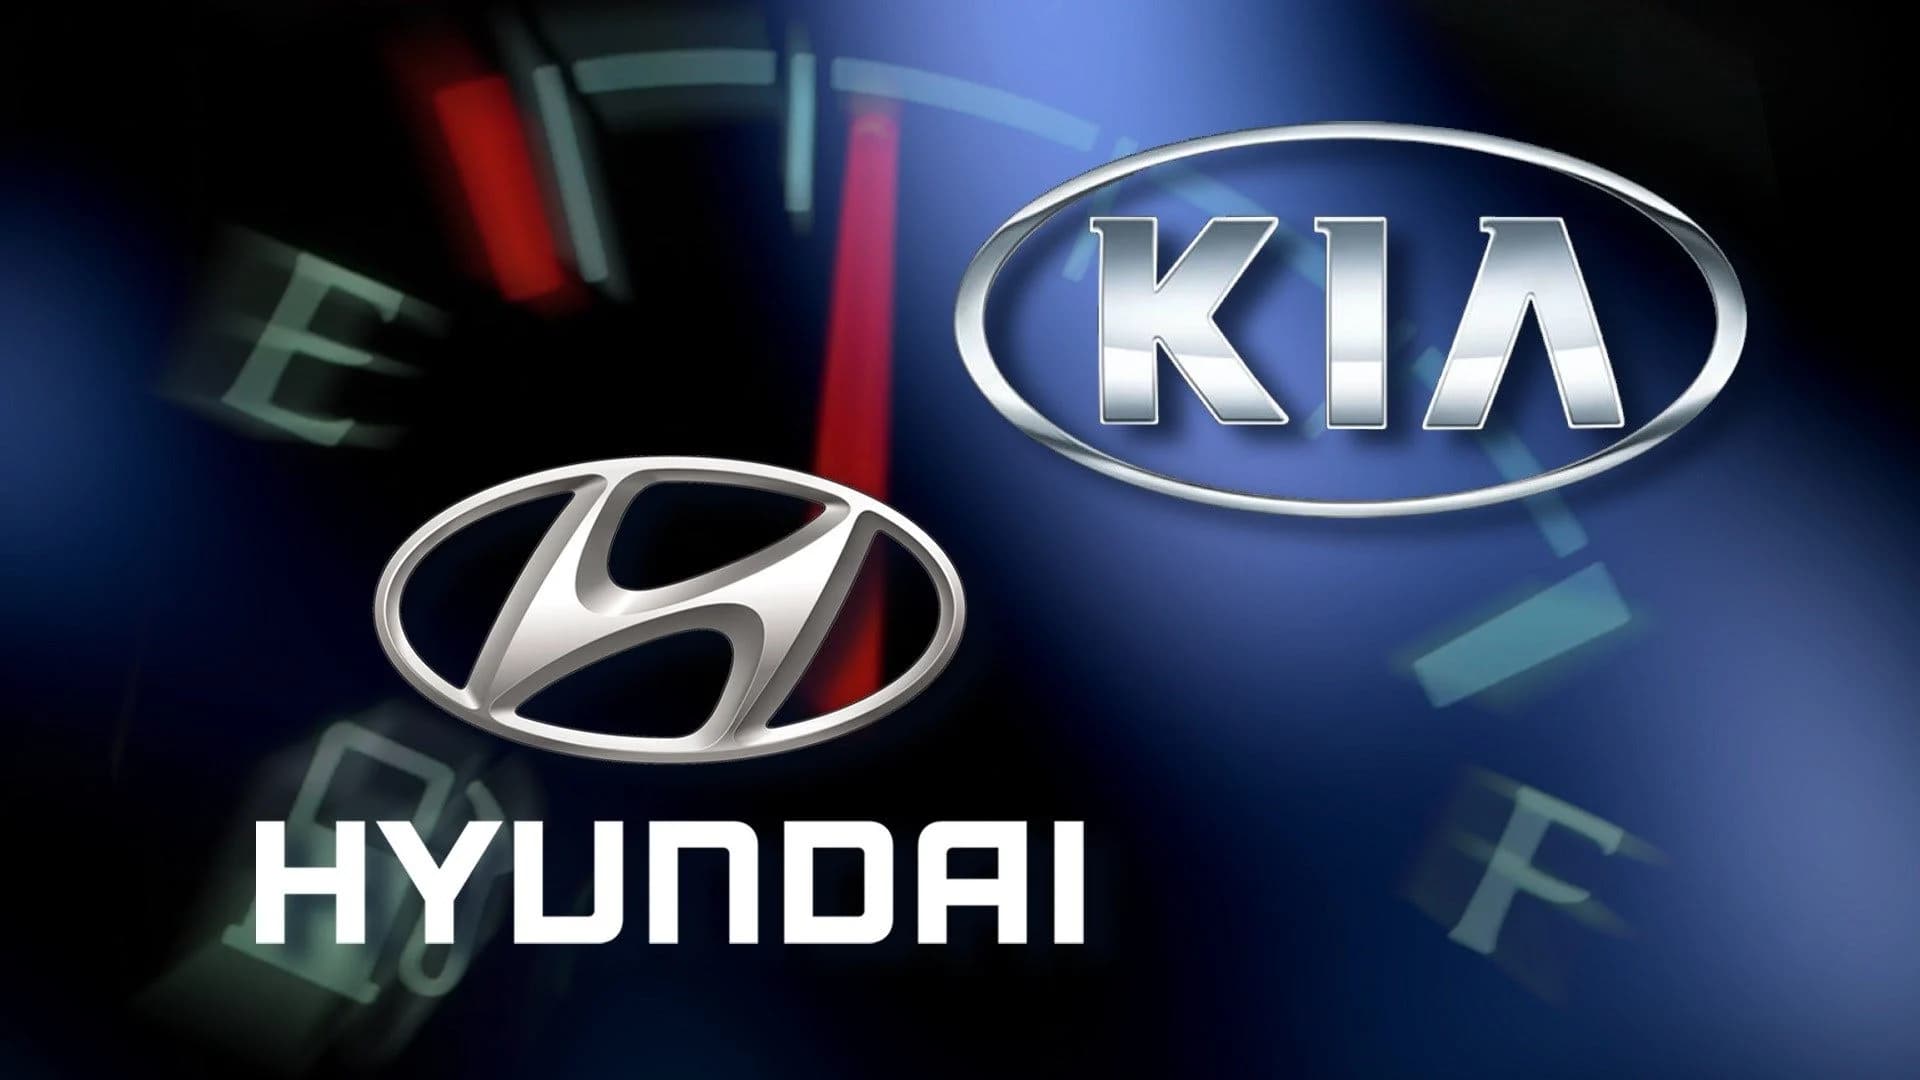 Hyundai, Kia recall over 500K vehicles as fire risk spreads